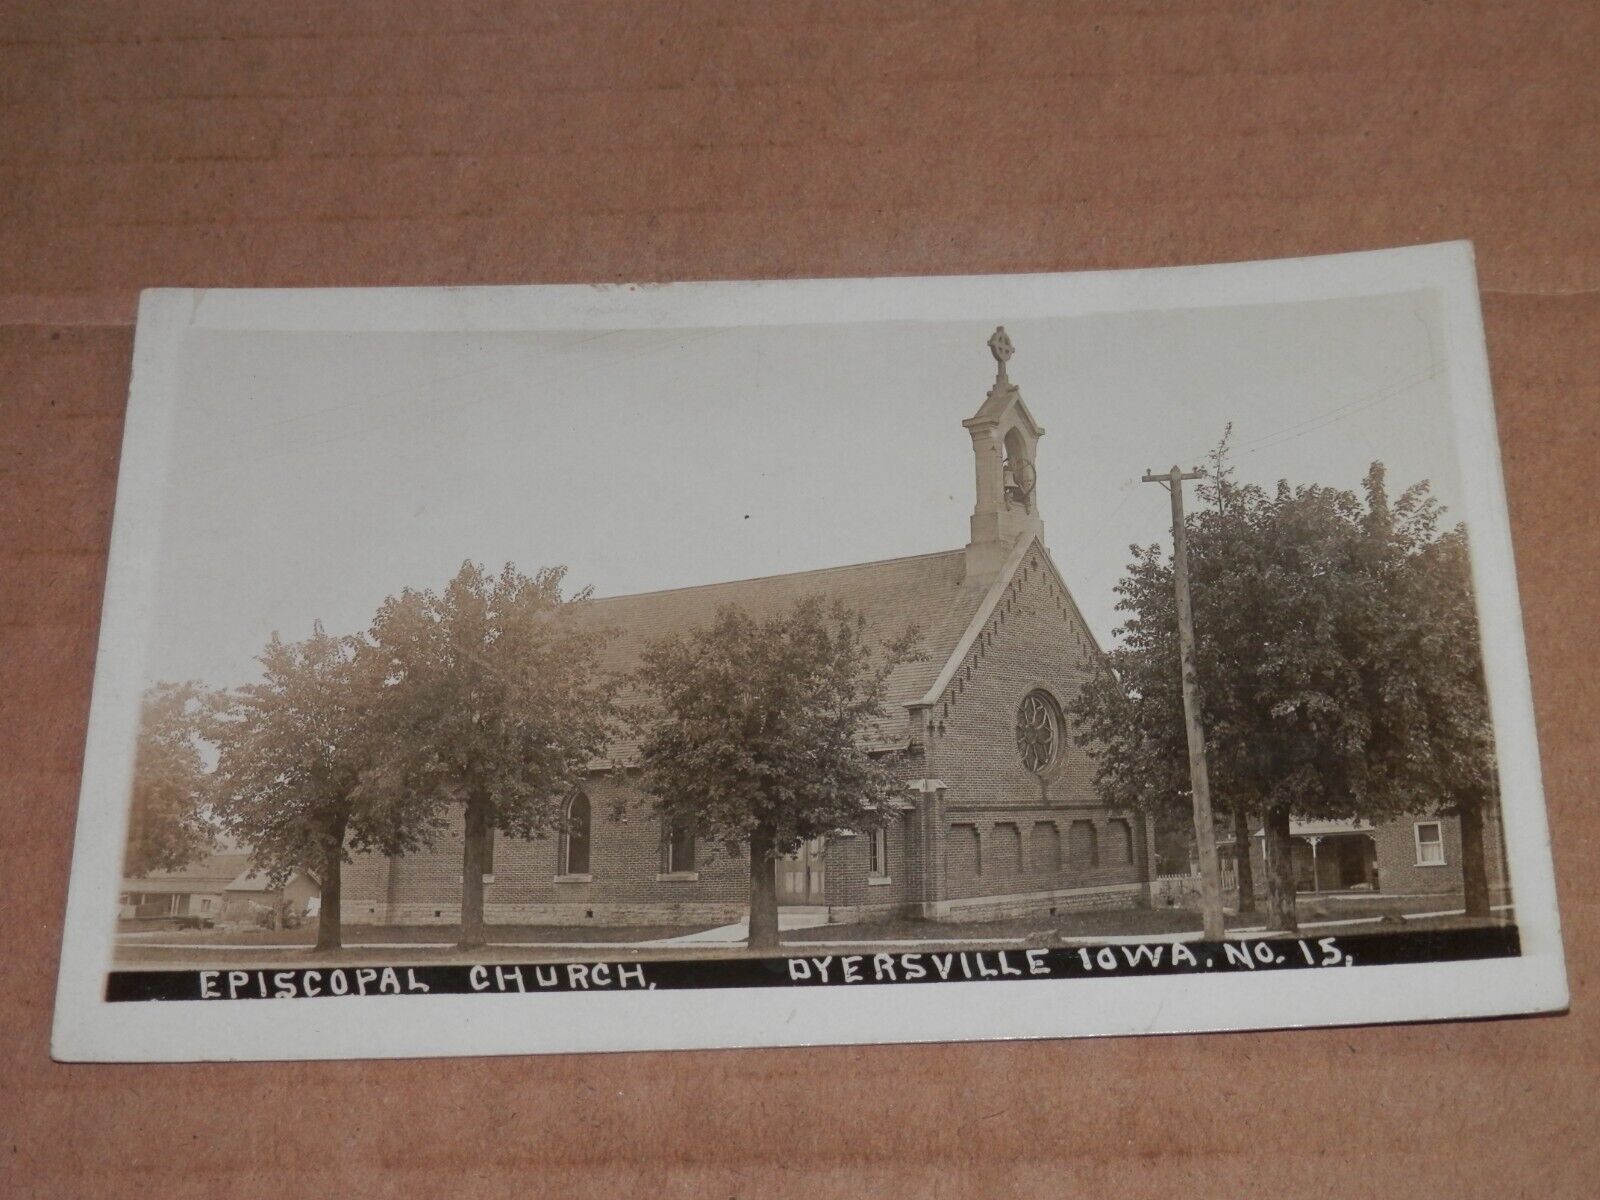 DYERSVILLE IOWA - 1910-1920'S ERA REAL-PHOTO POSTCARD - EPISCOPAL CHURCH